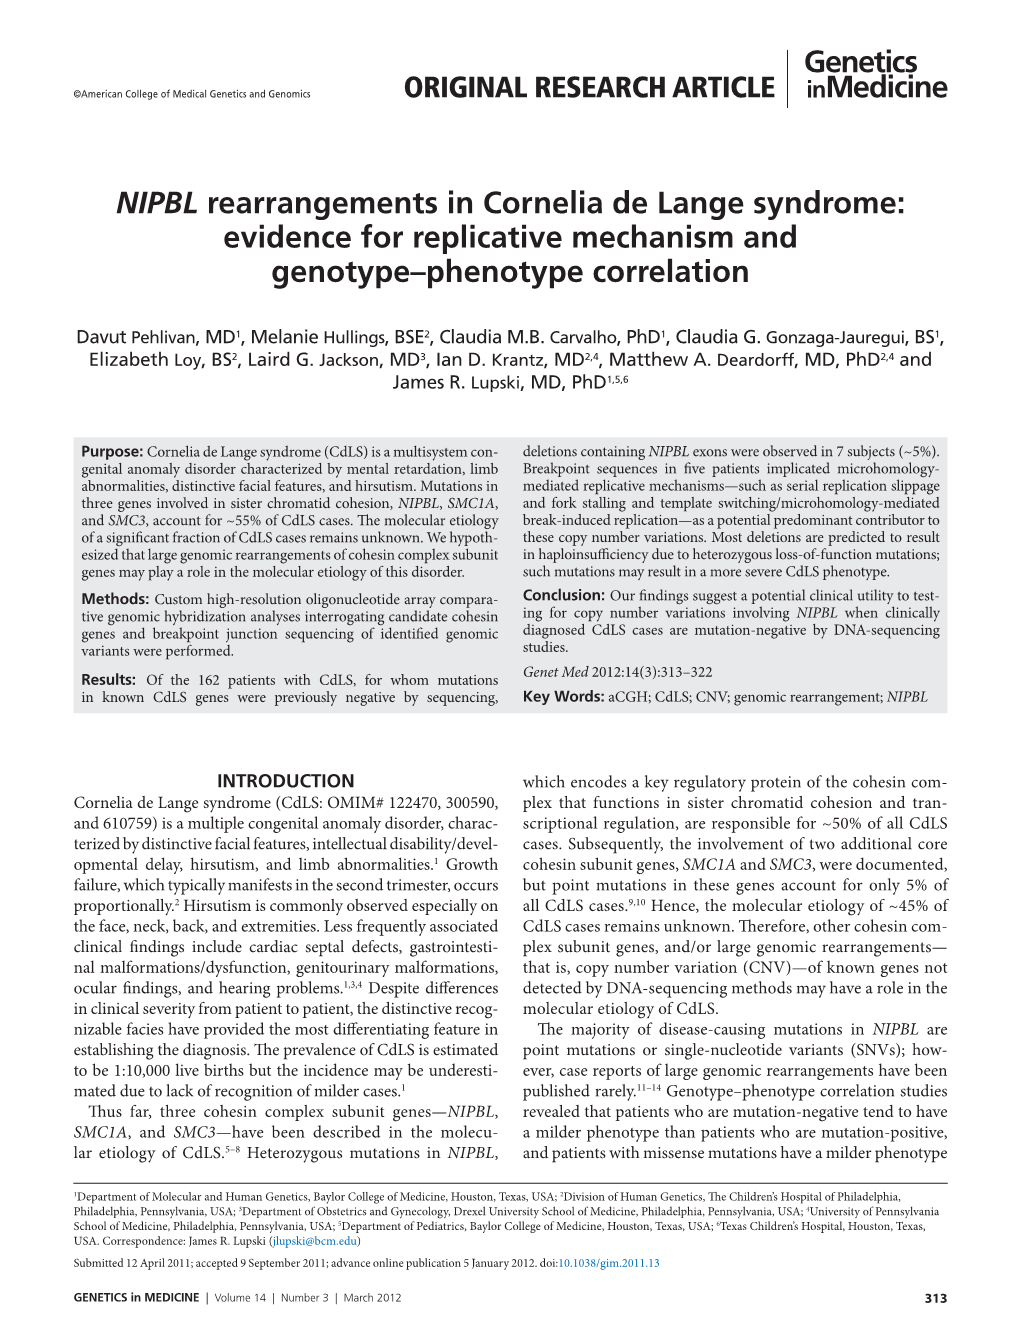 NIPBL Rearrangements in Cornelia De Lange Syndrome: Evidence for Replicative Mechanism and Genotype–Phenotype Correlation